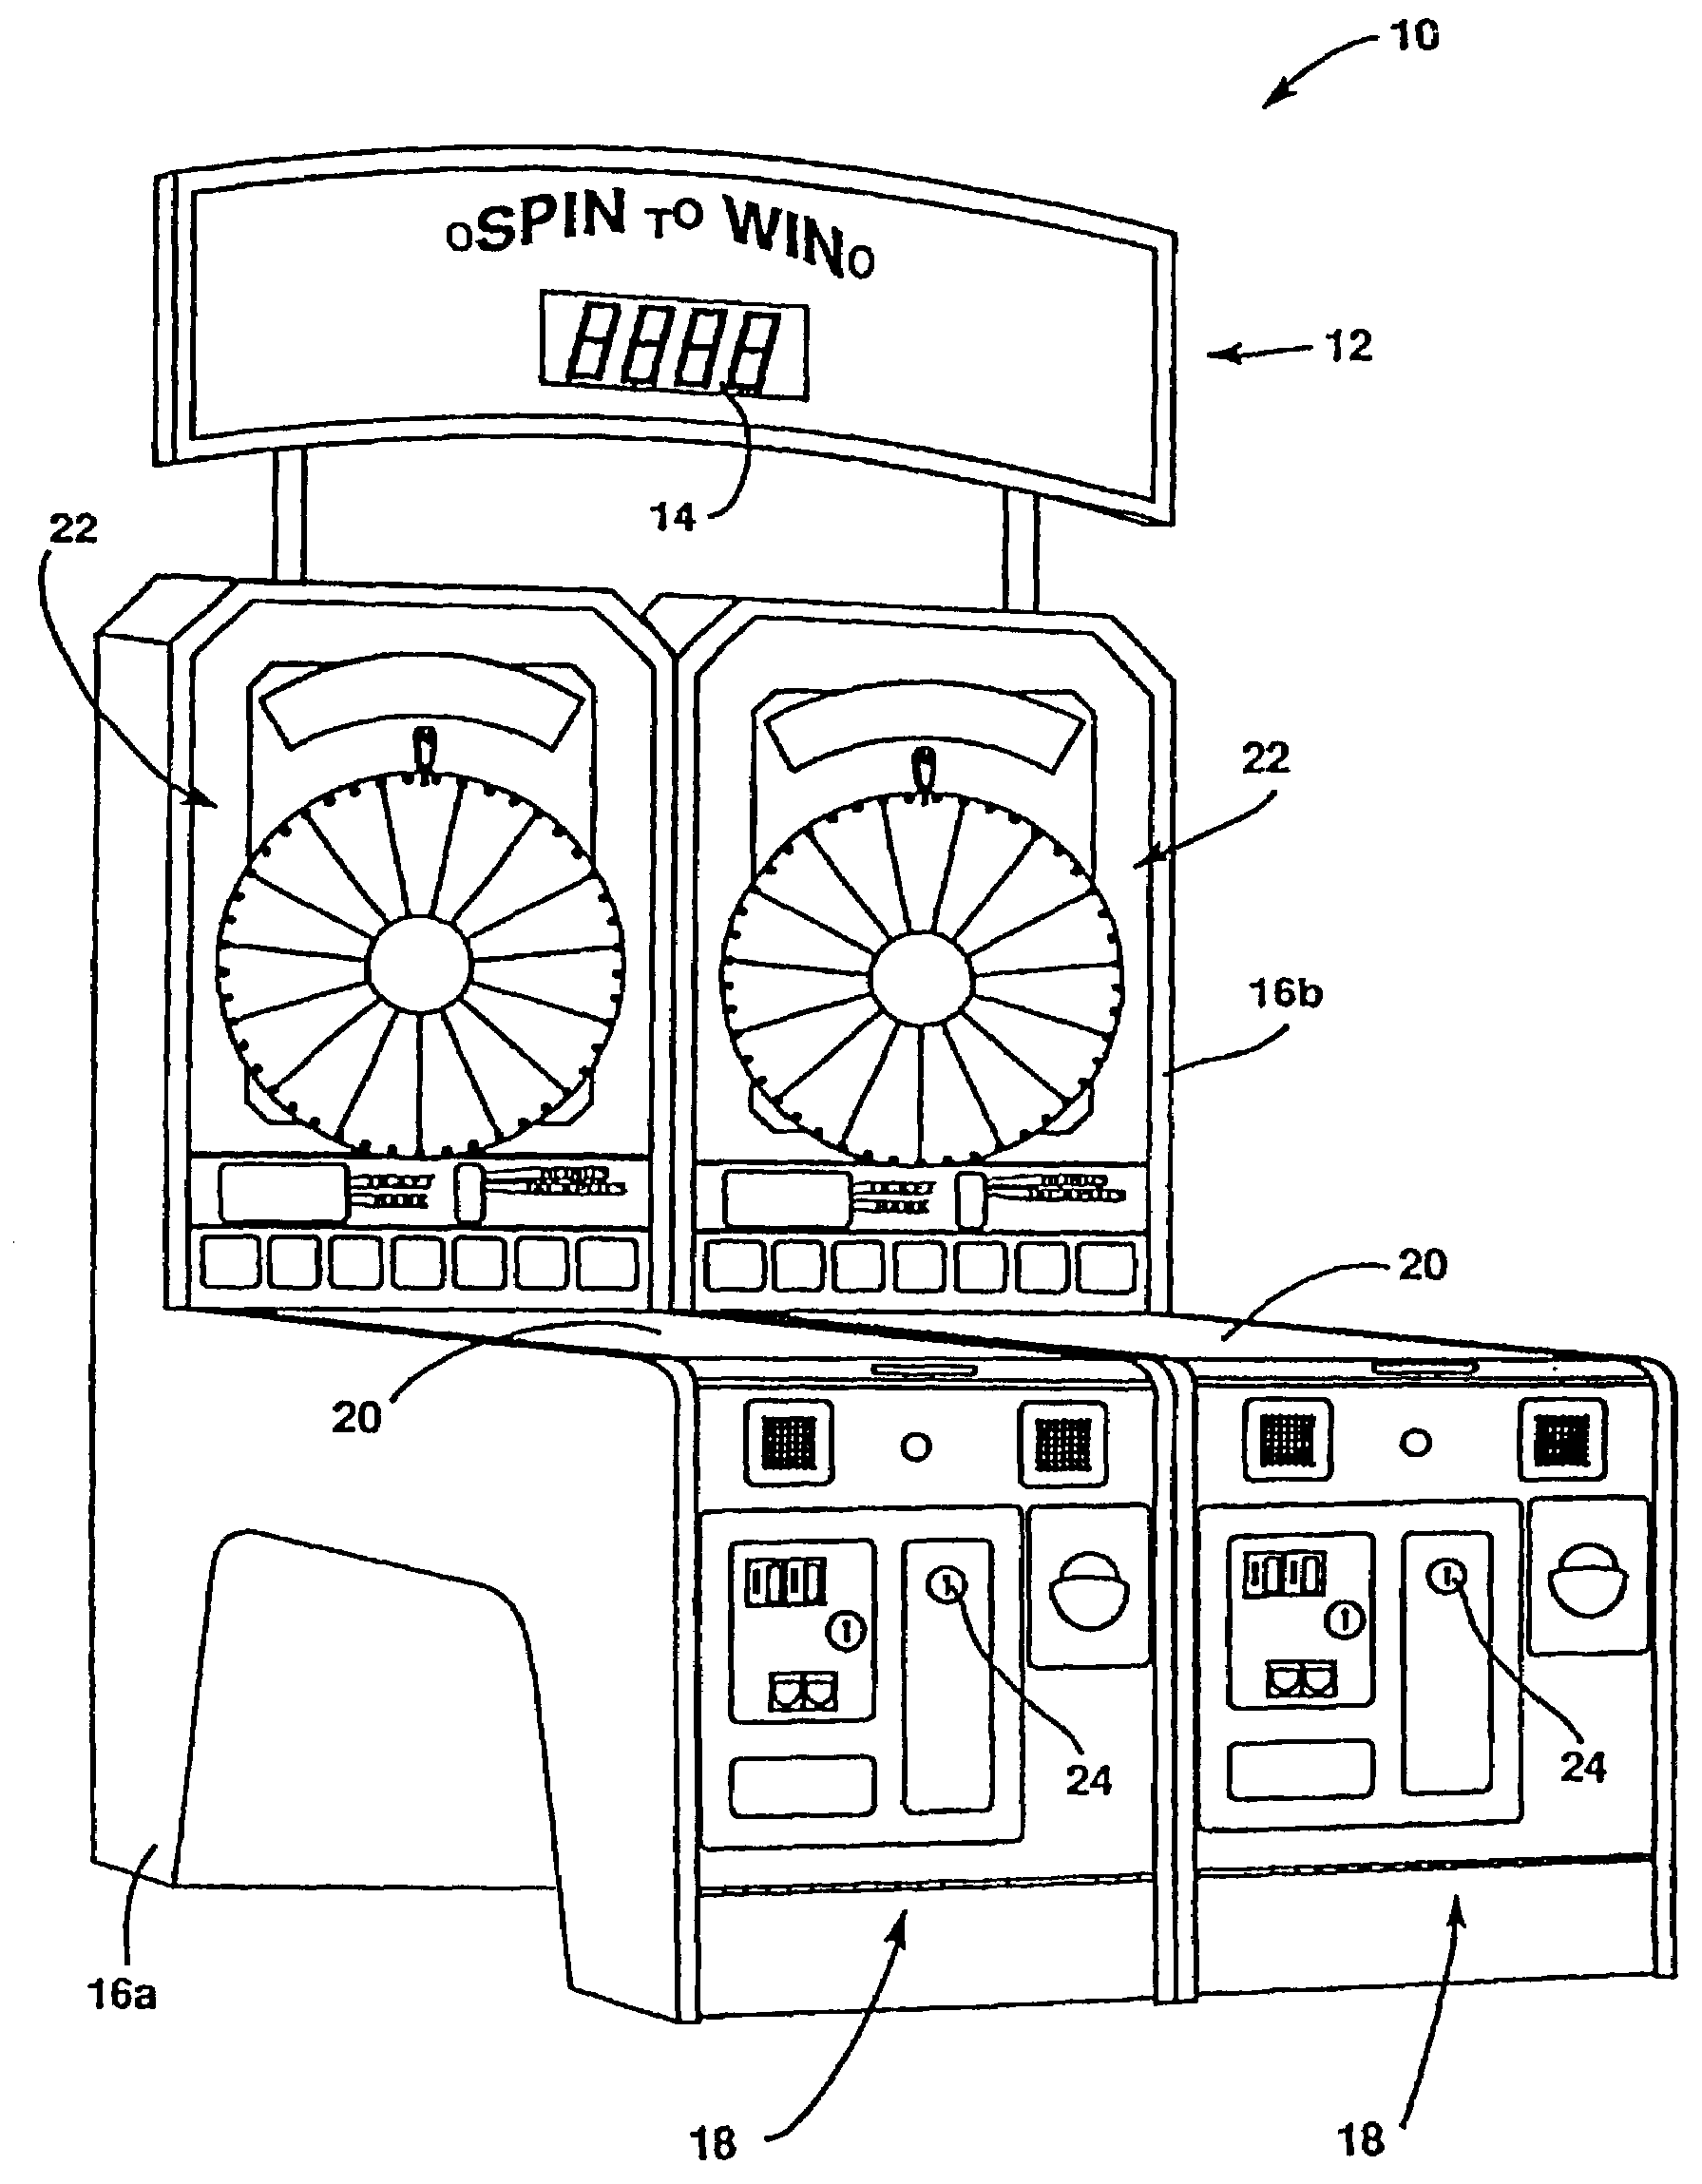 Wheel indicator and ticket dispenser apparatus